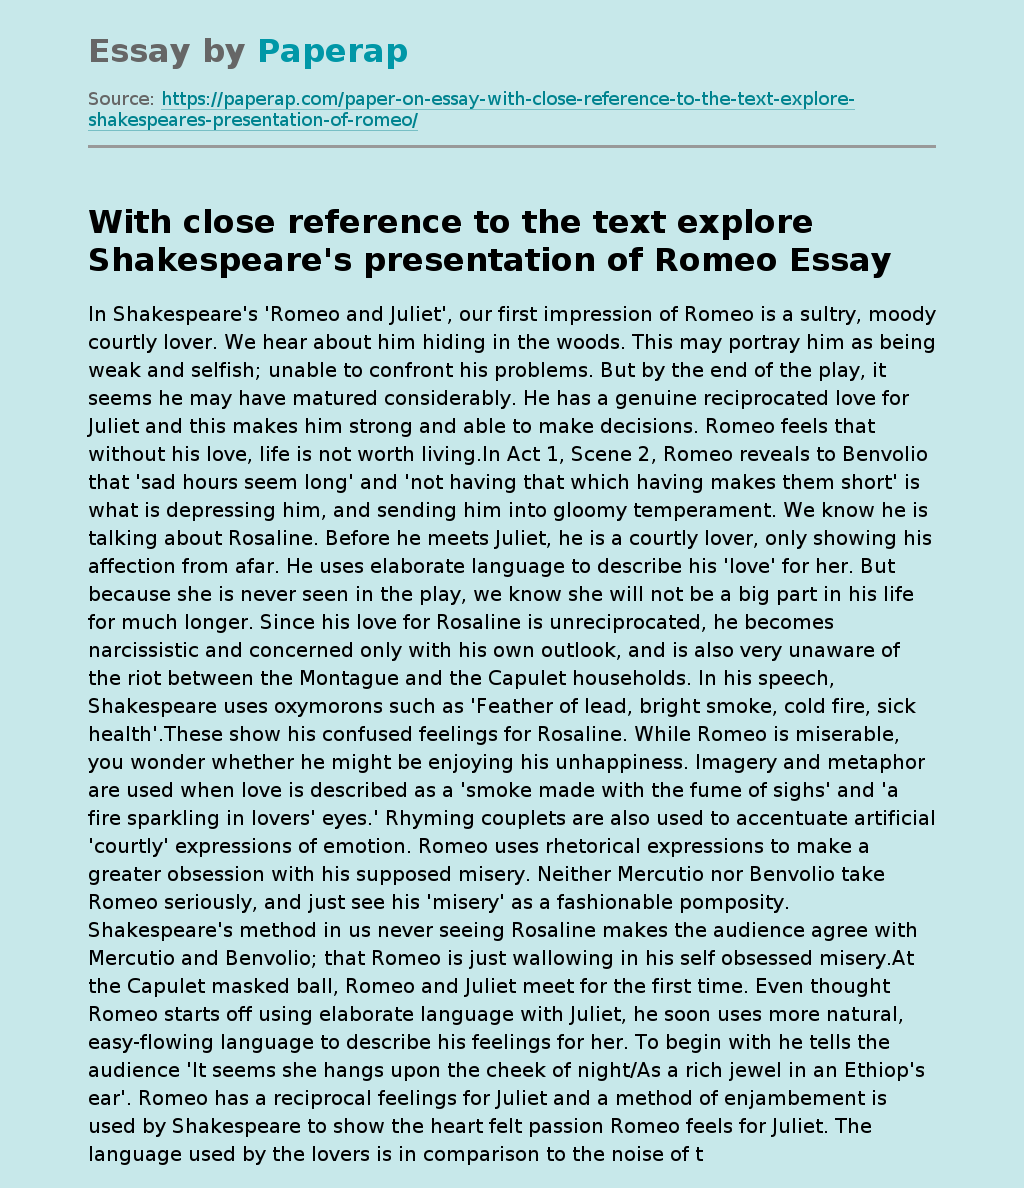 William Shakespeare’s Presentation of the Hero Romeo